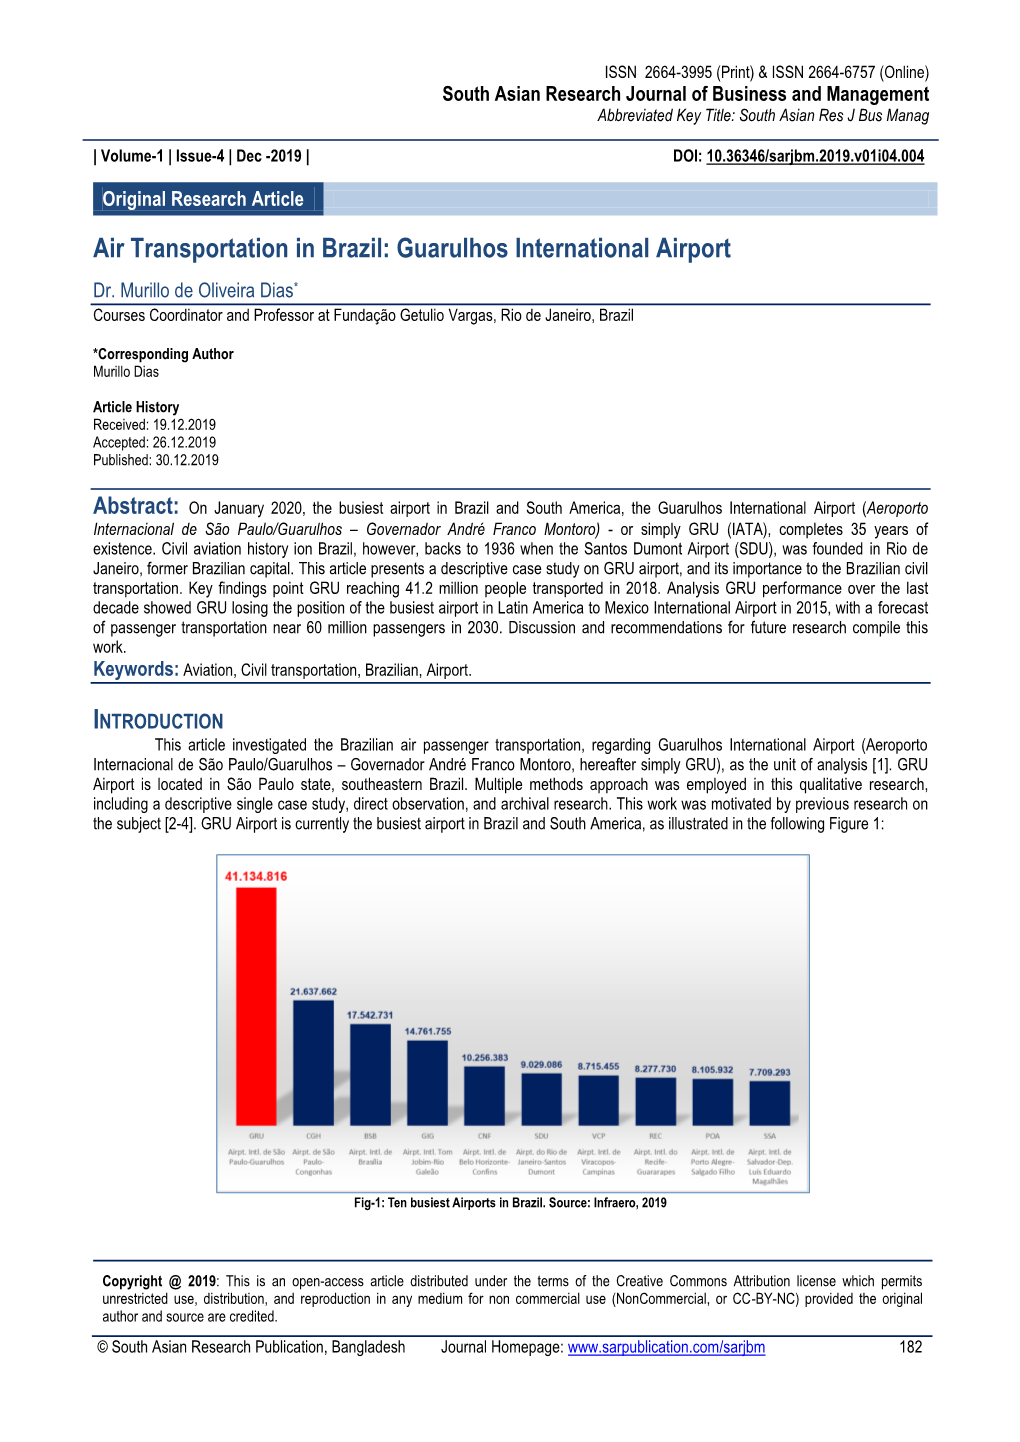 Air Transportation in Brazil: Guarulhos International Airport